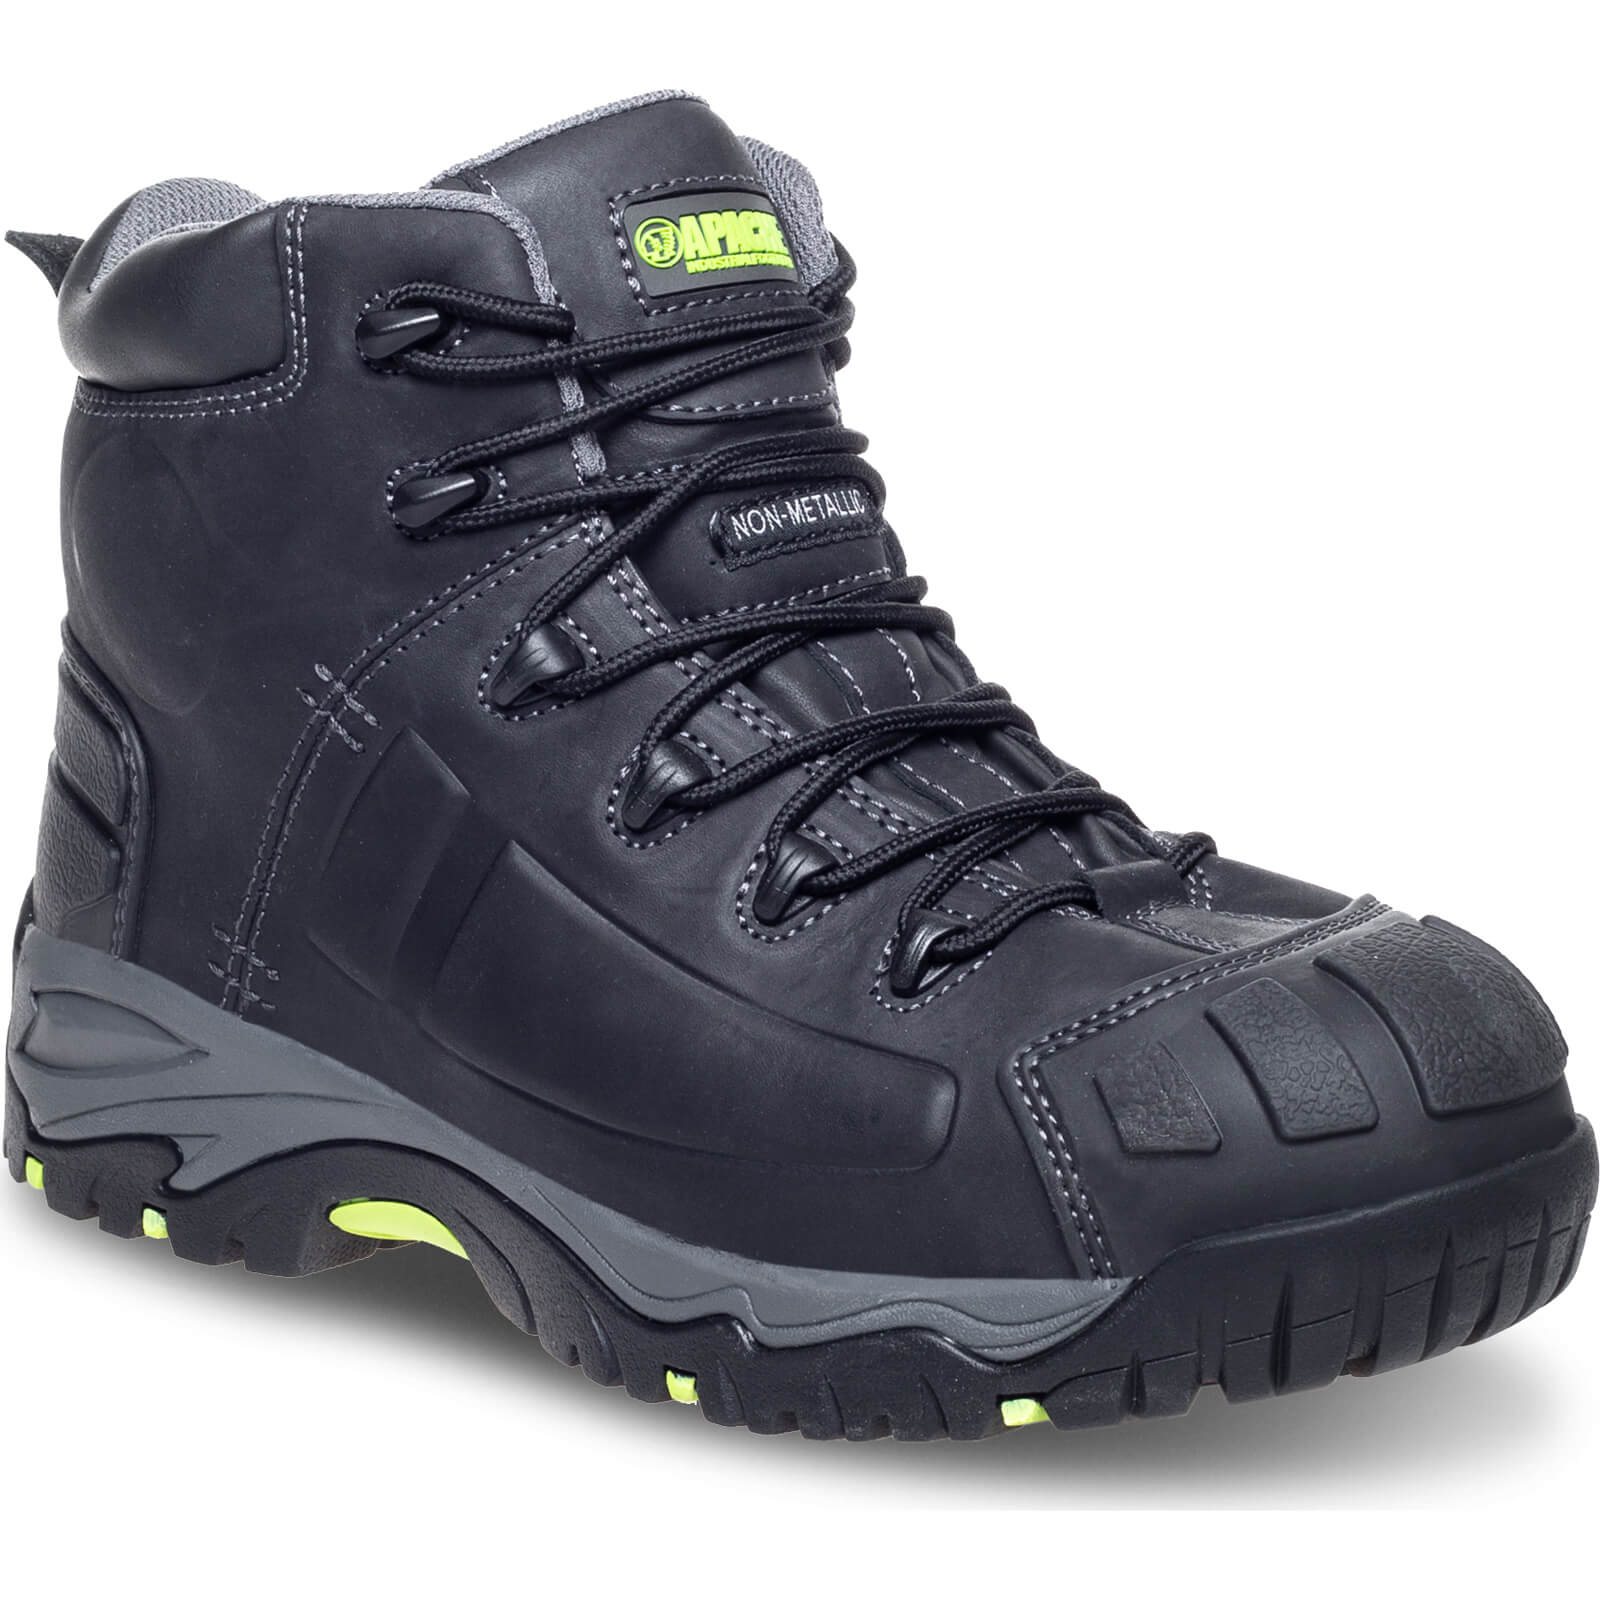 Apache Mercury Non Metallic Waterproof Safety Boots Black Size 6